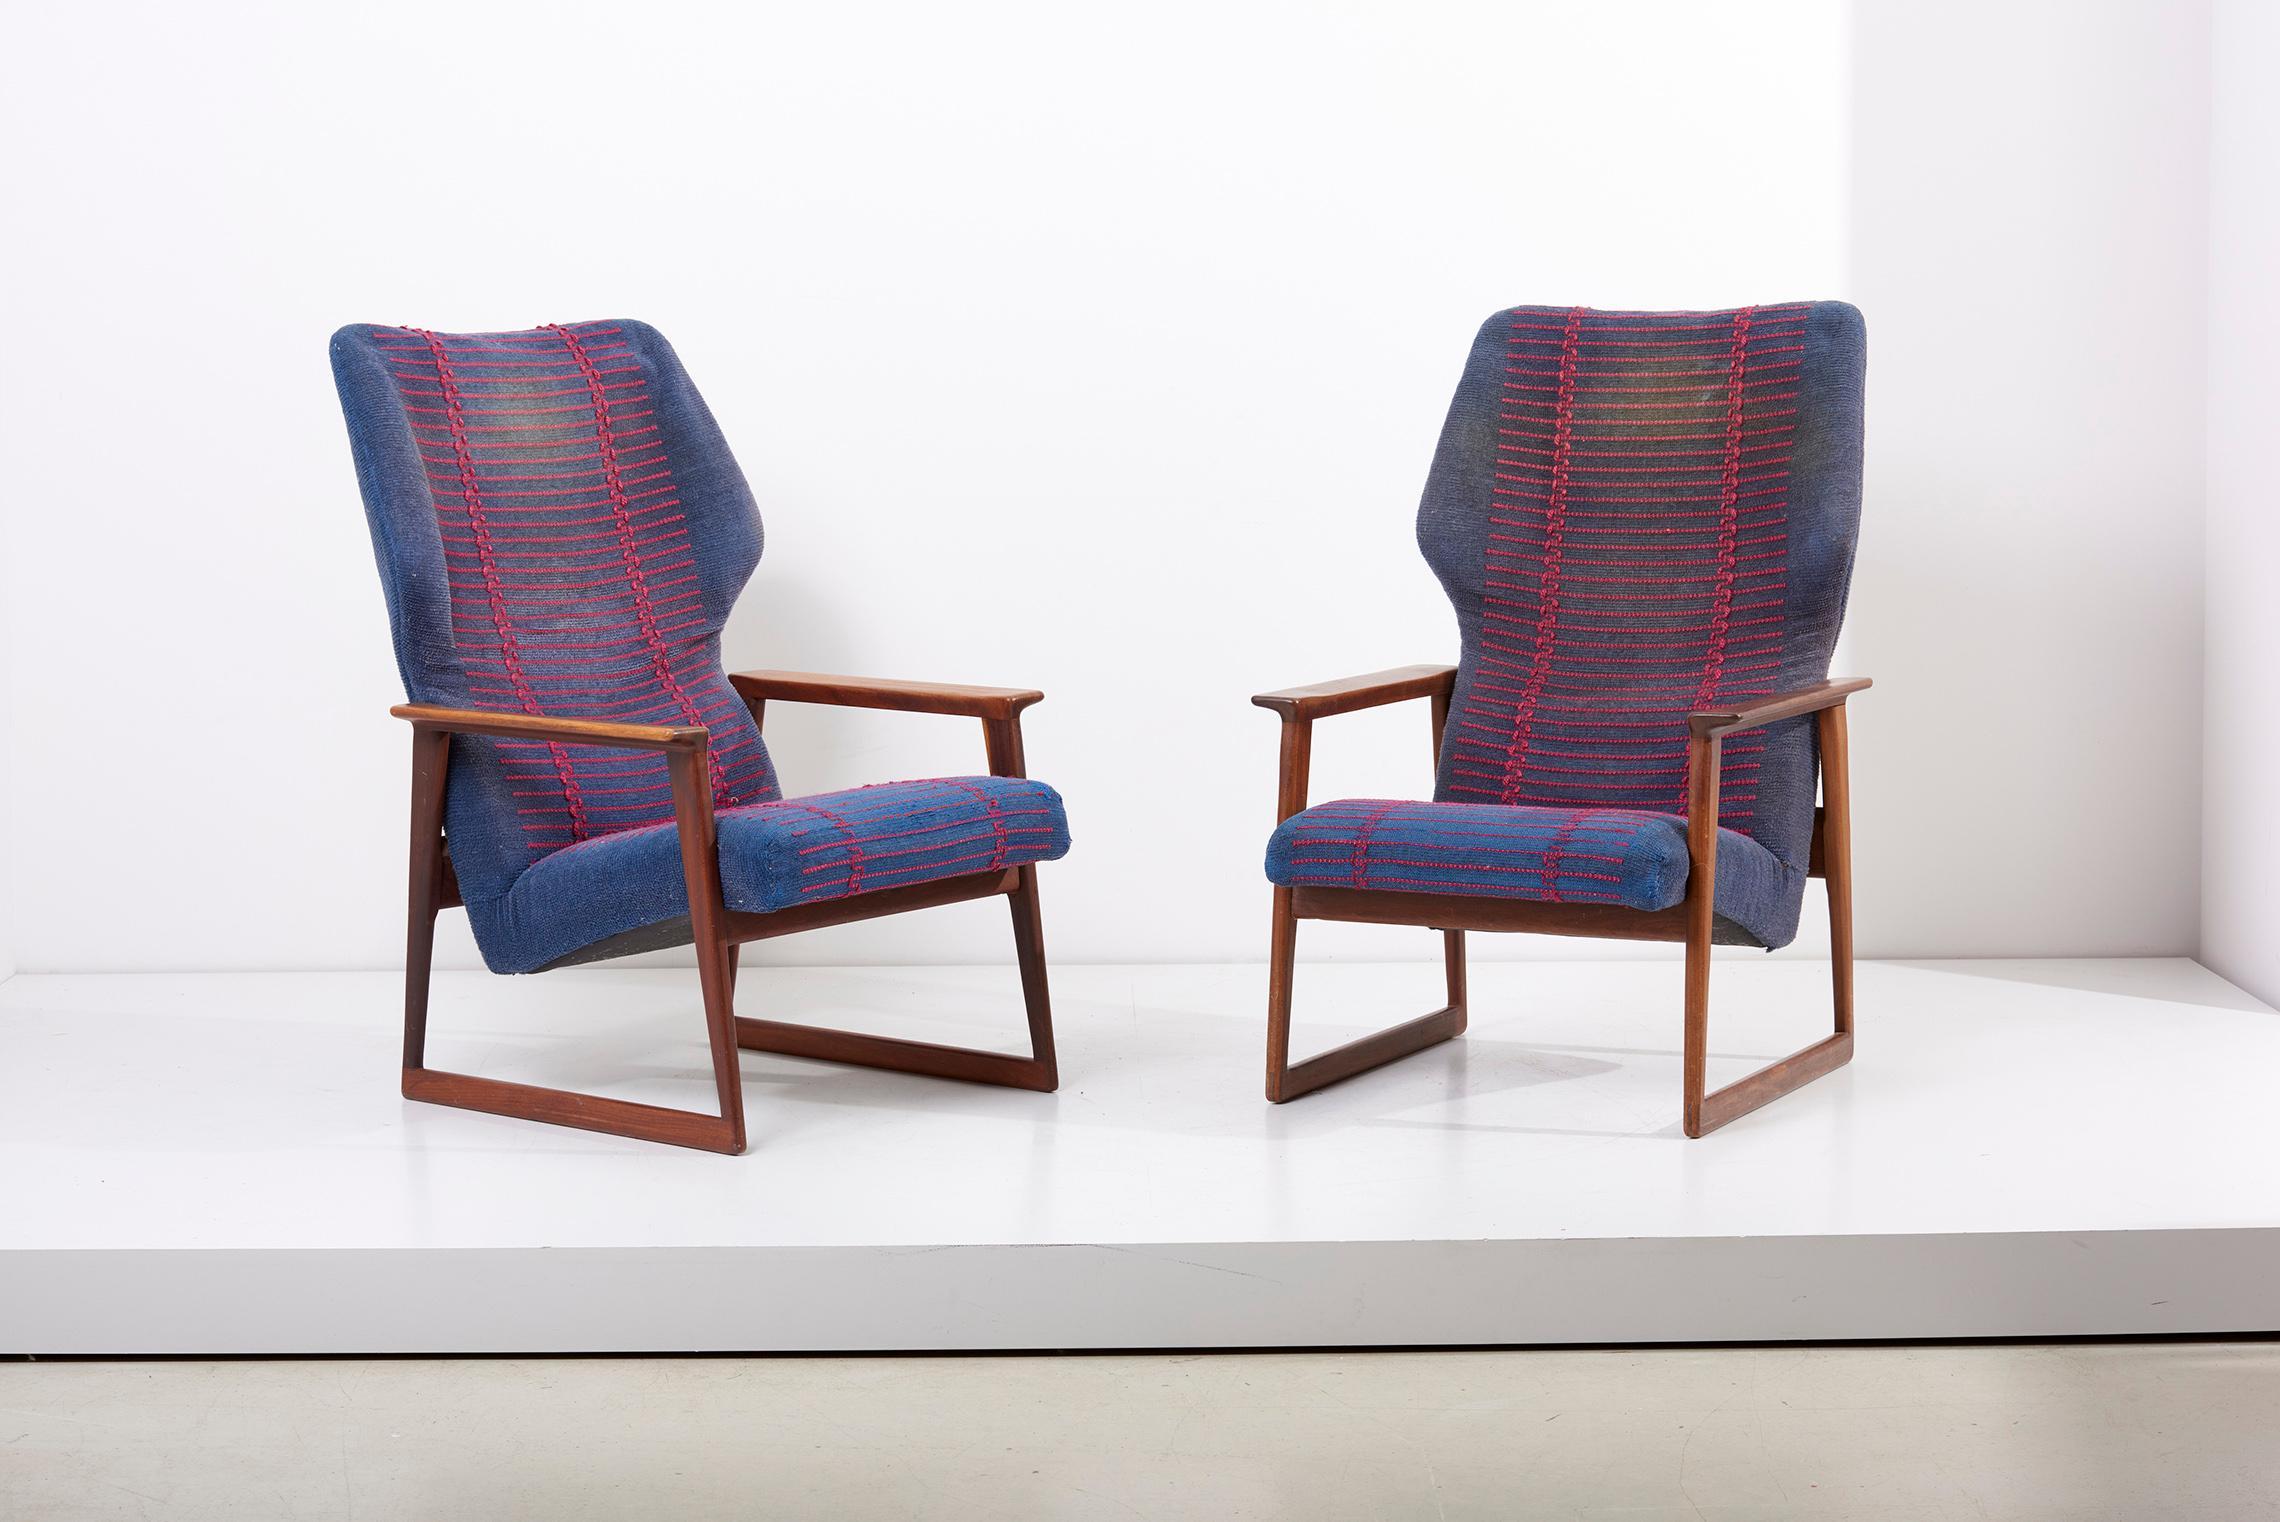 Pair of Danish lounge chairs in teak in original condition.
Unique fabric design in the style of Hans Olsen.